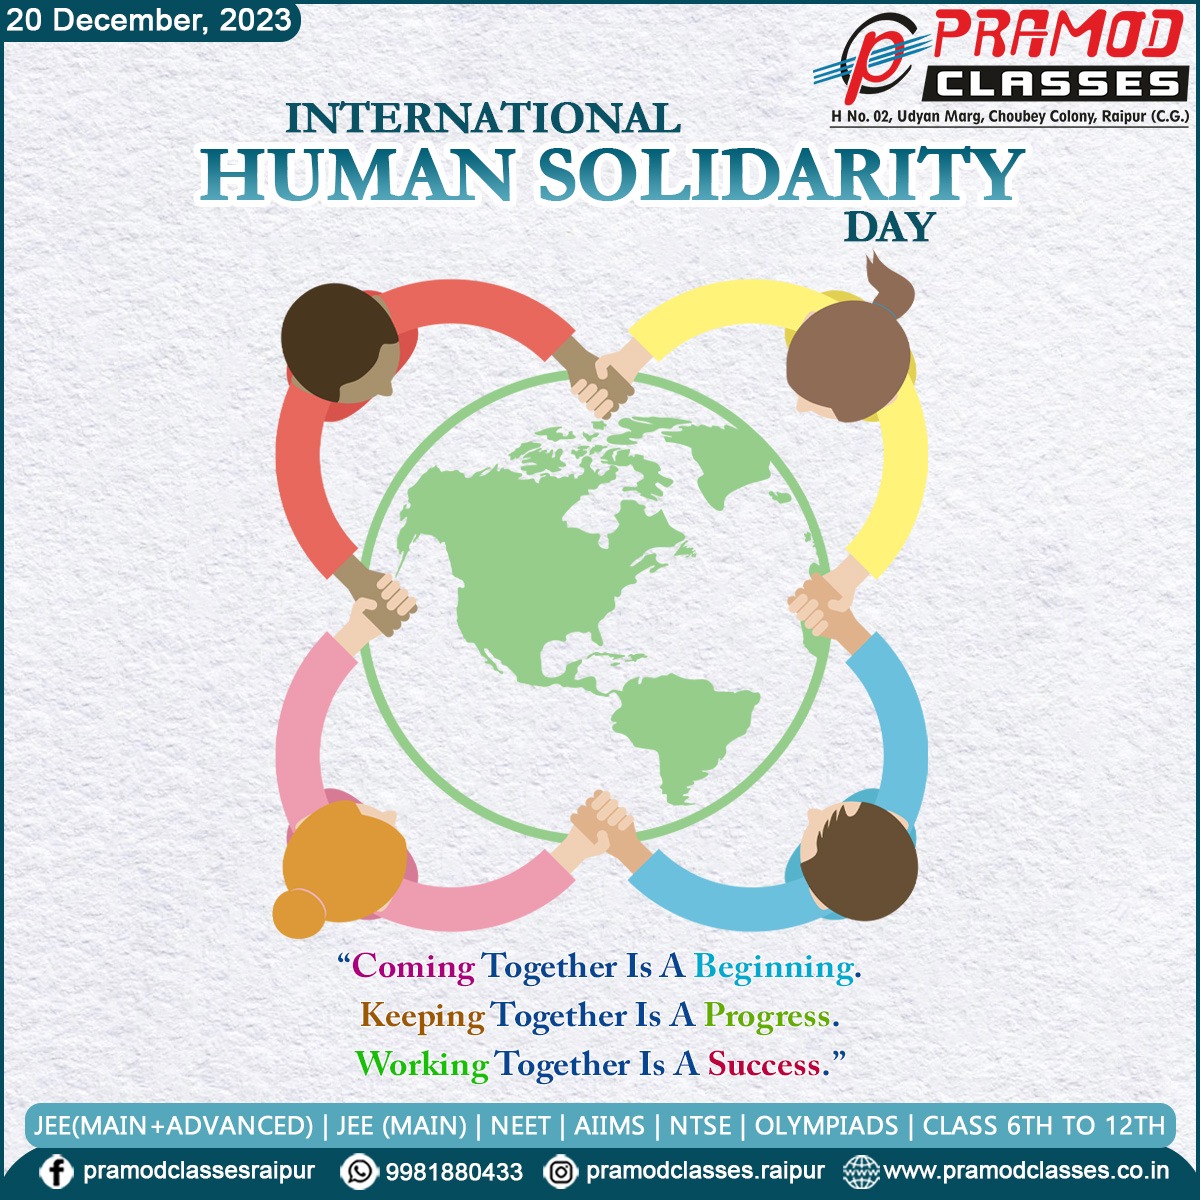 #InternationalHumanSolidarityDay #InternationalHumanSolidarityDay2023 #SolidarityDay #SolidarityDay2023 #HumanSolidarityDay #HumanSolidarityDay2023